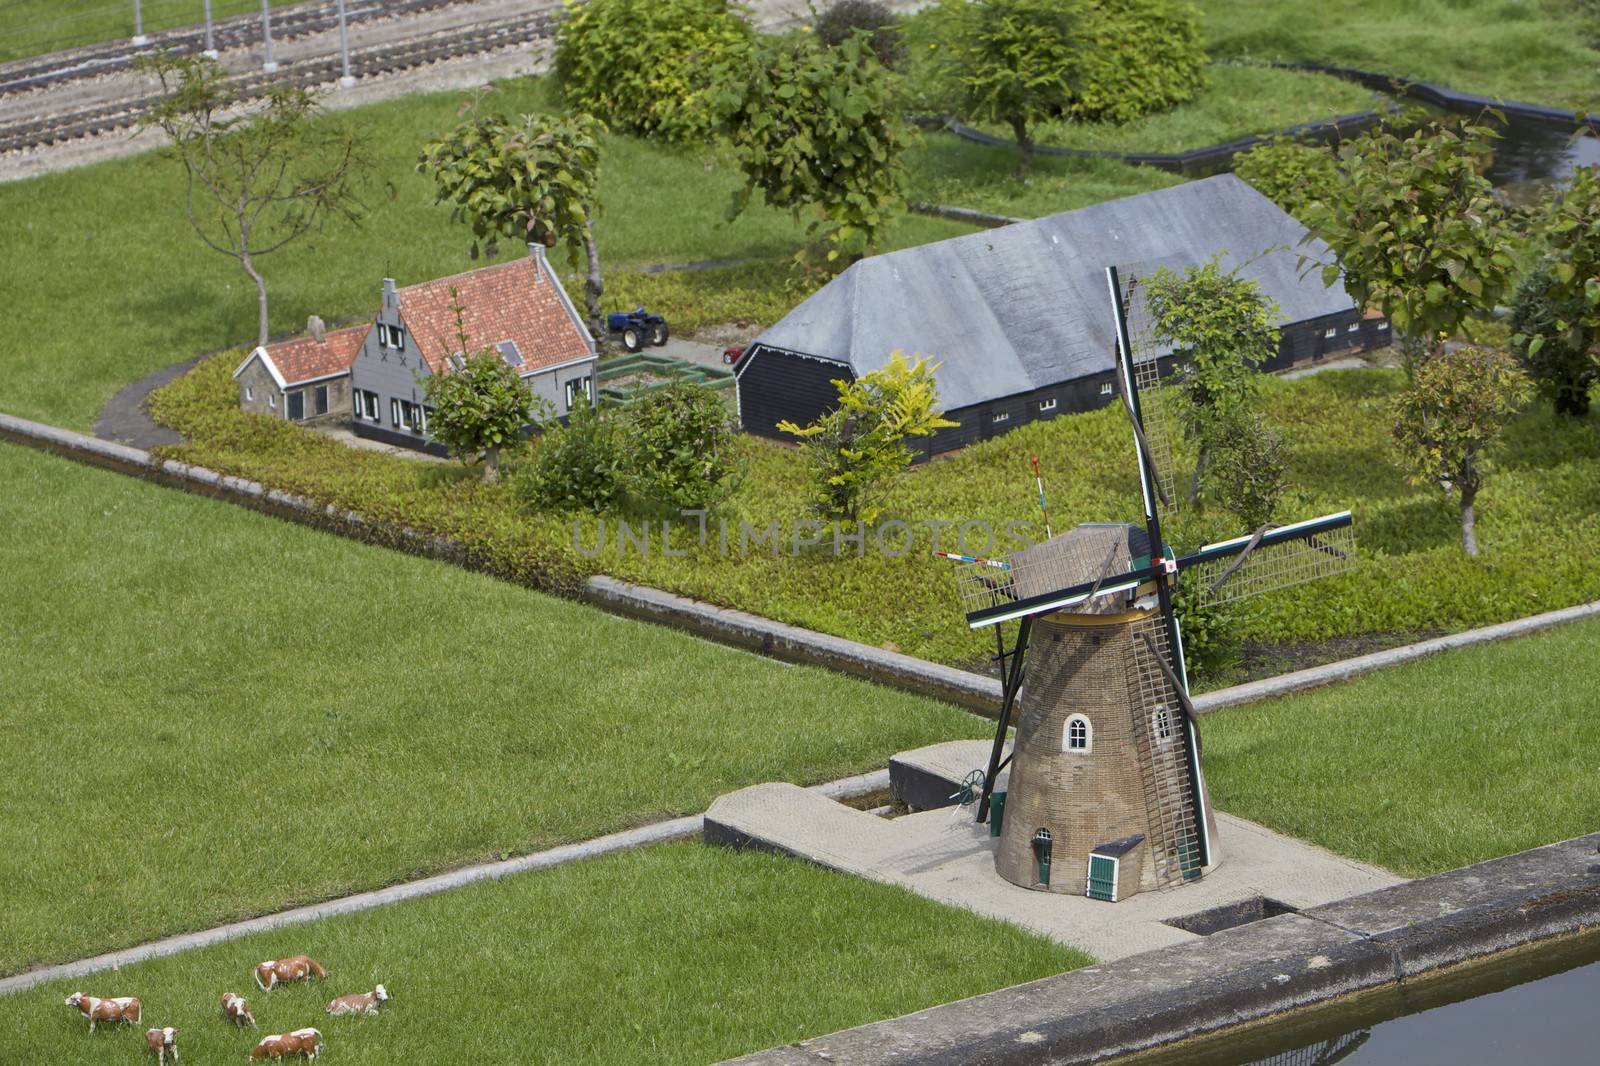 Madurodam Miniature Town, Netherlands by instinia